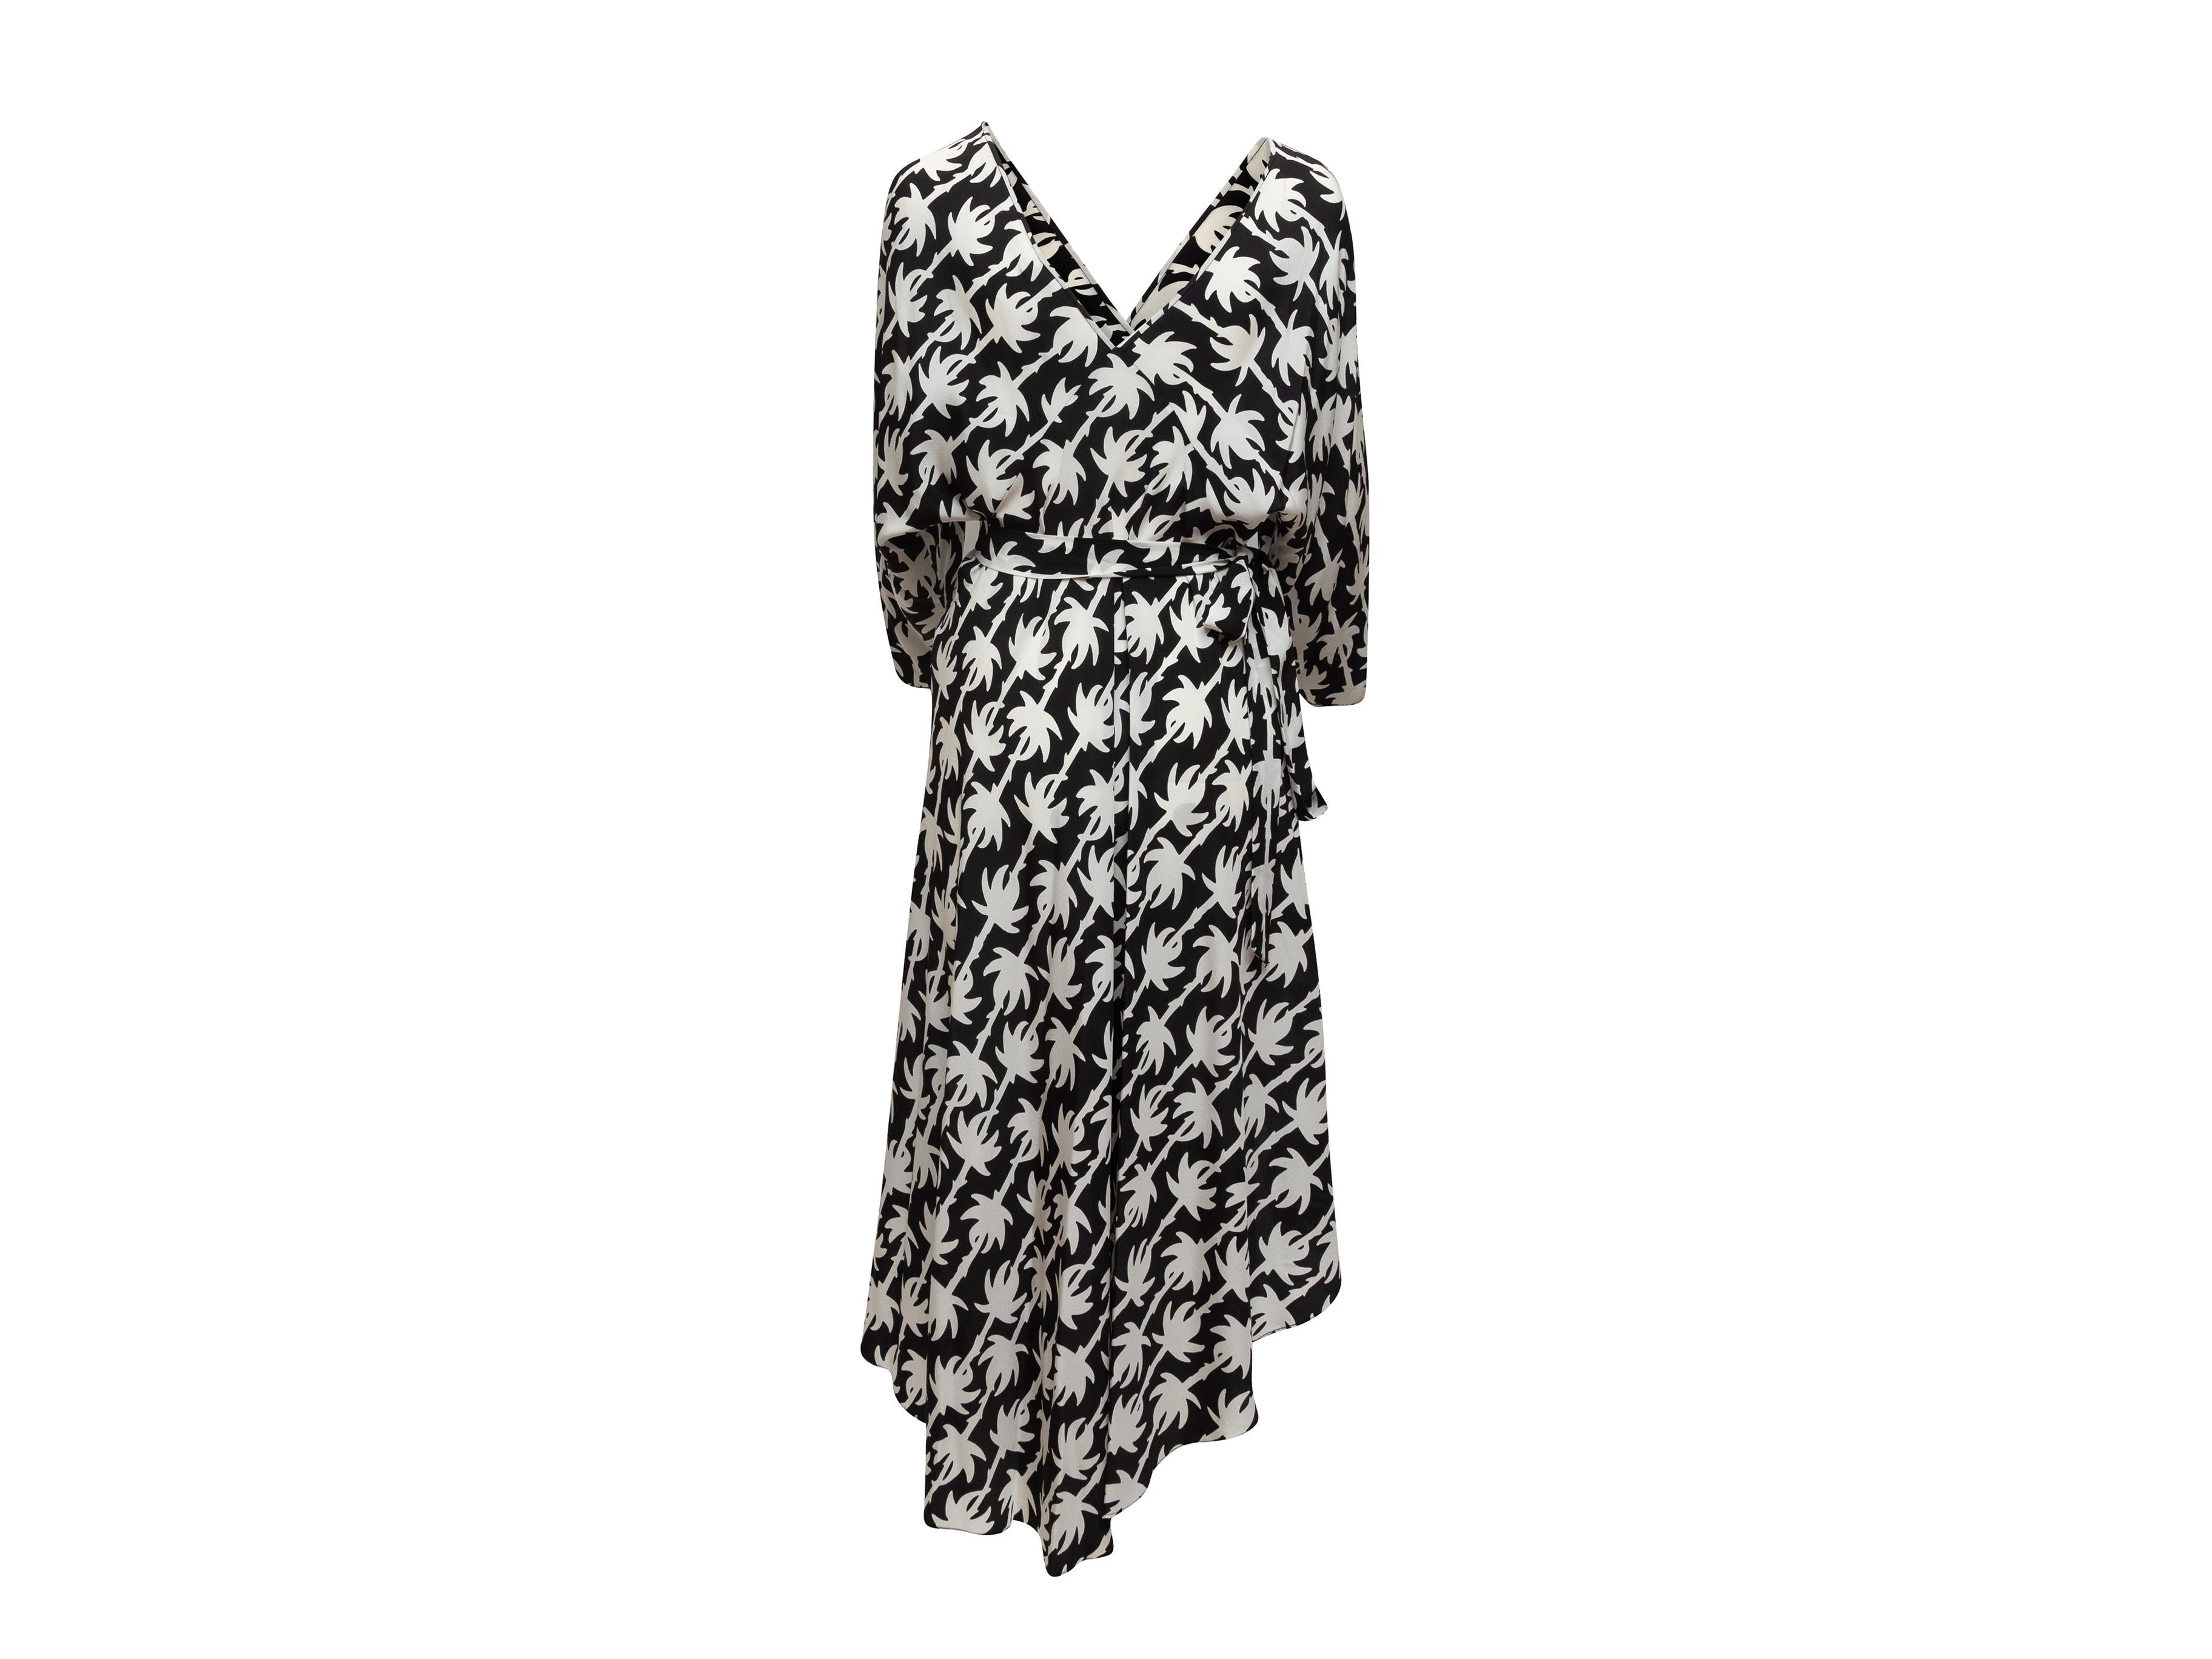 Product details: Black and white silk long sleeve wrap dress by Diane Von Furstenberg. Abstract print throughout. Surplice neckline. Asymmetrical hem. Tie closure at waist. 41